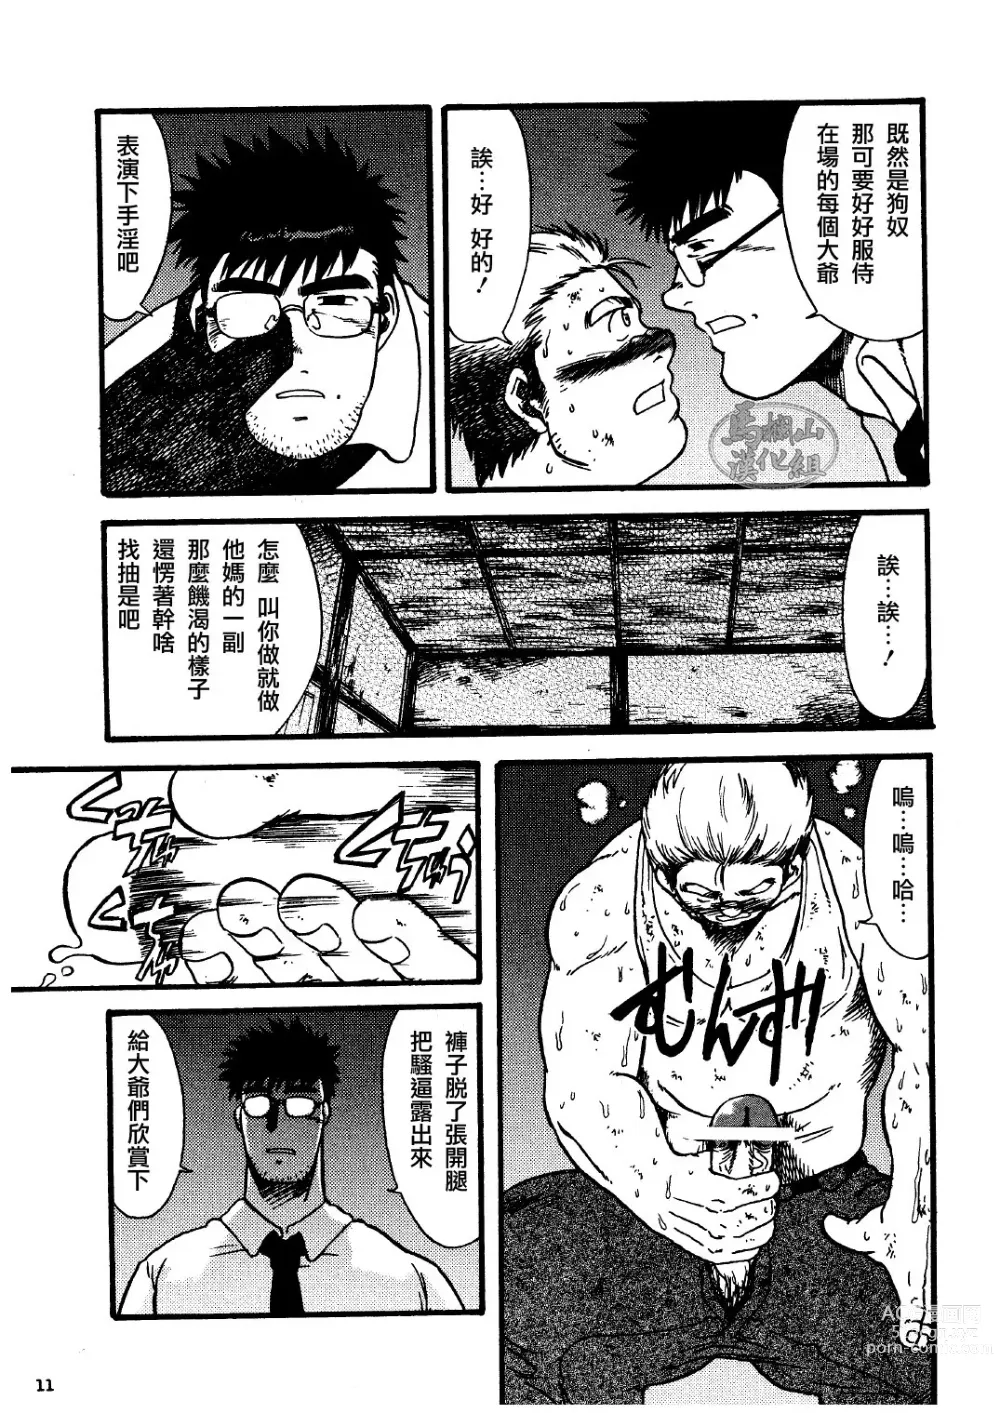 Page 7 of manga オルギア